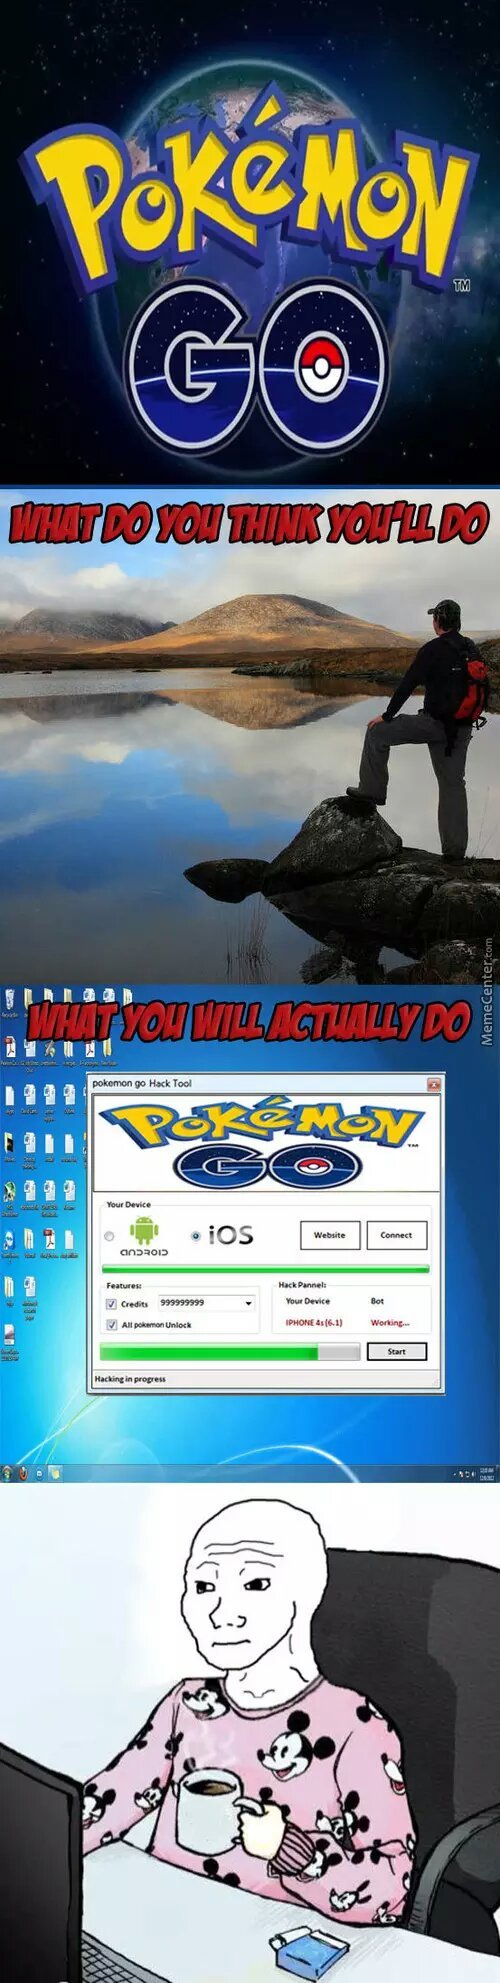 Pokémon go - meme